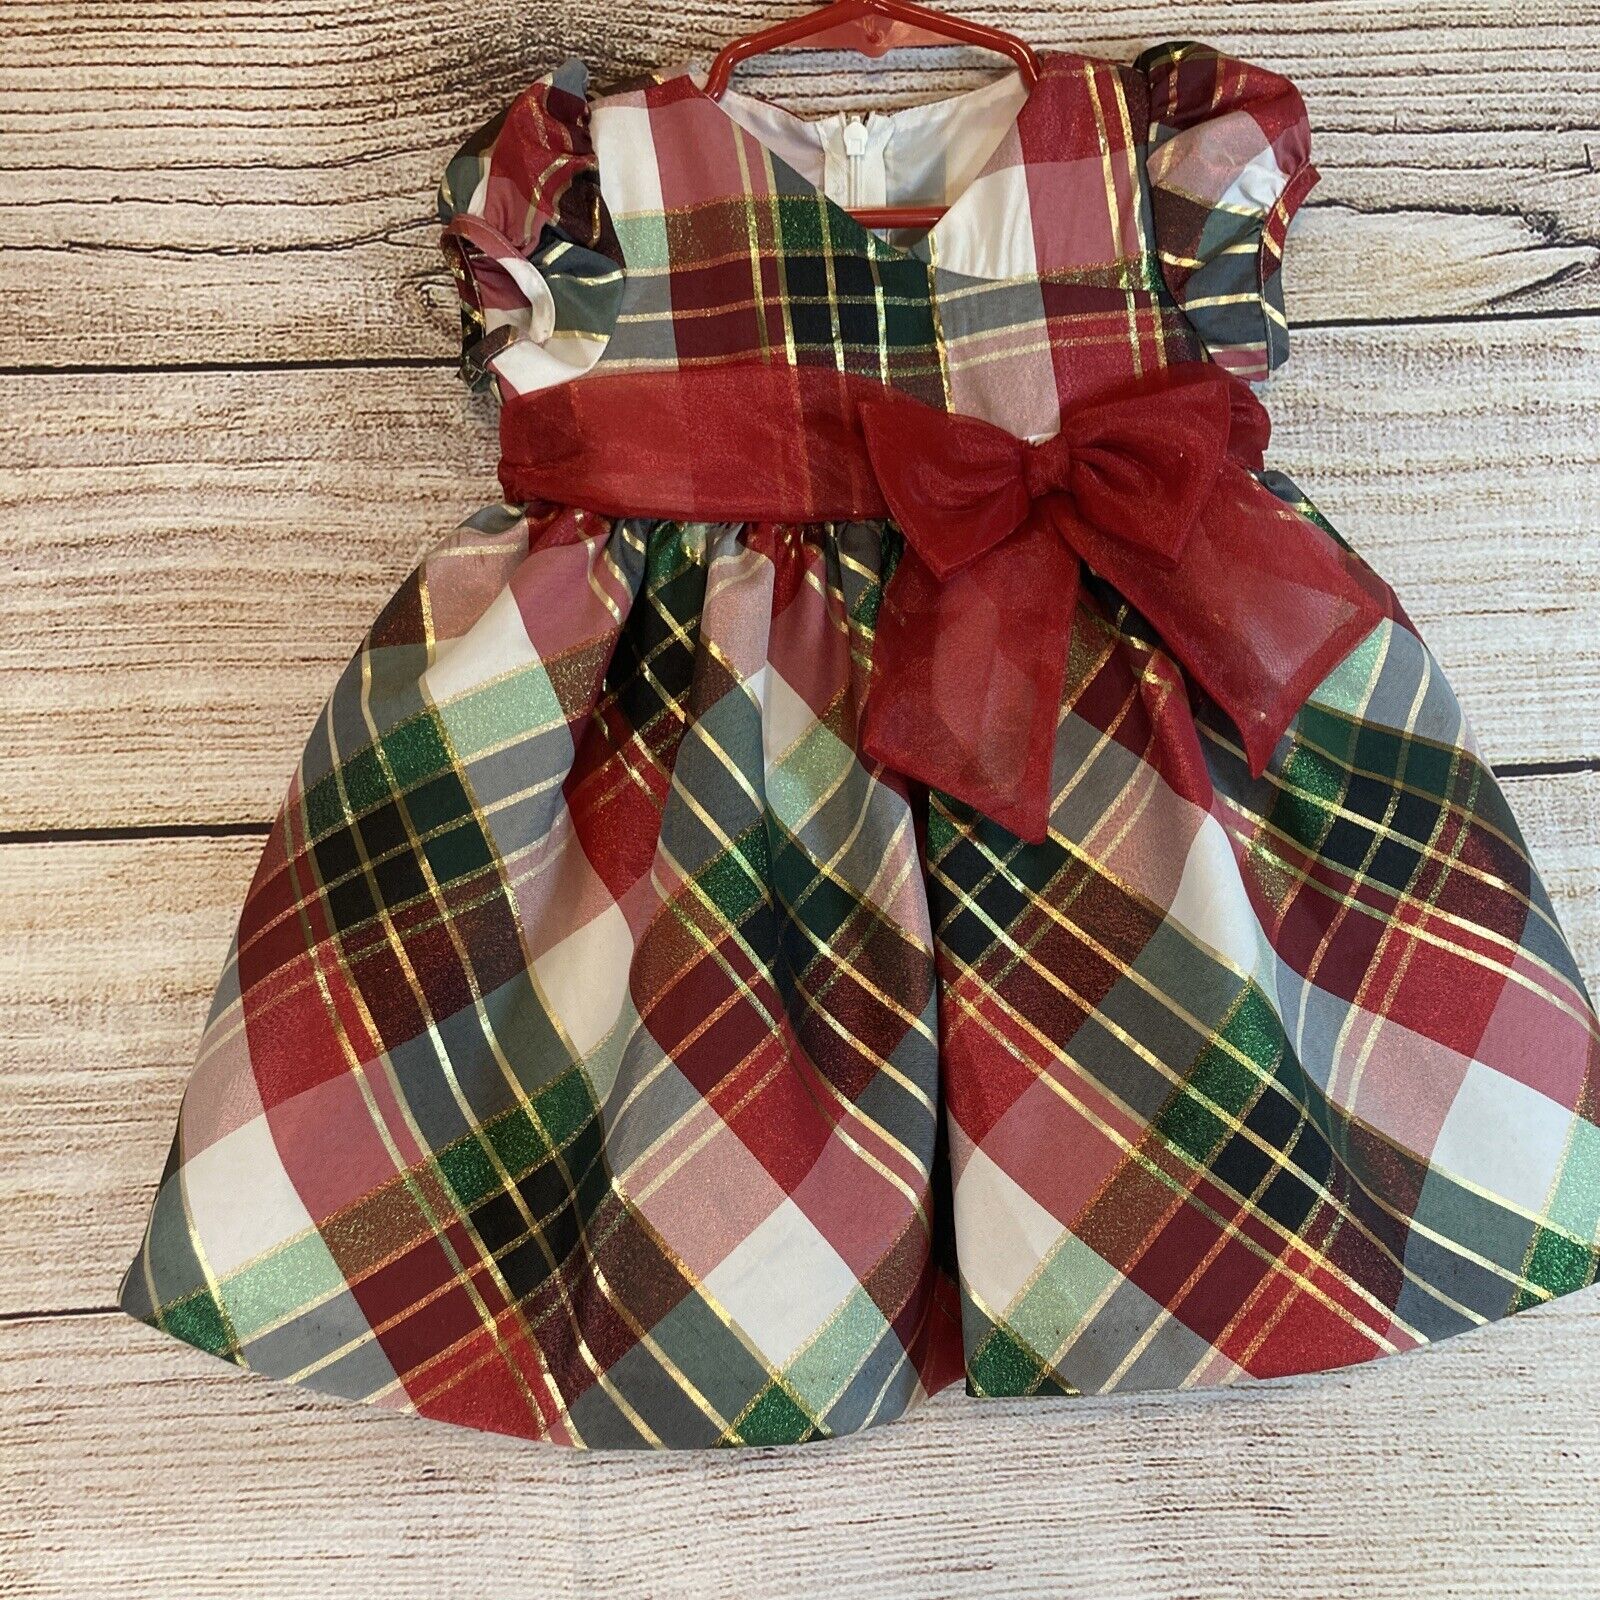 Christmas dress “Bonnie Baby” 18M Holiday Metalic Striped dress